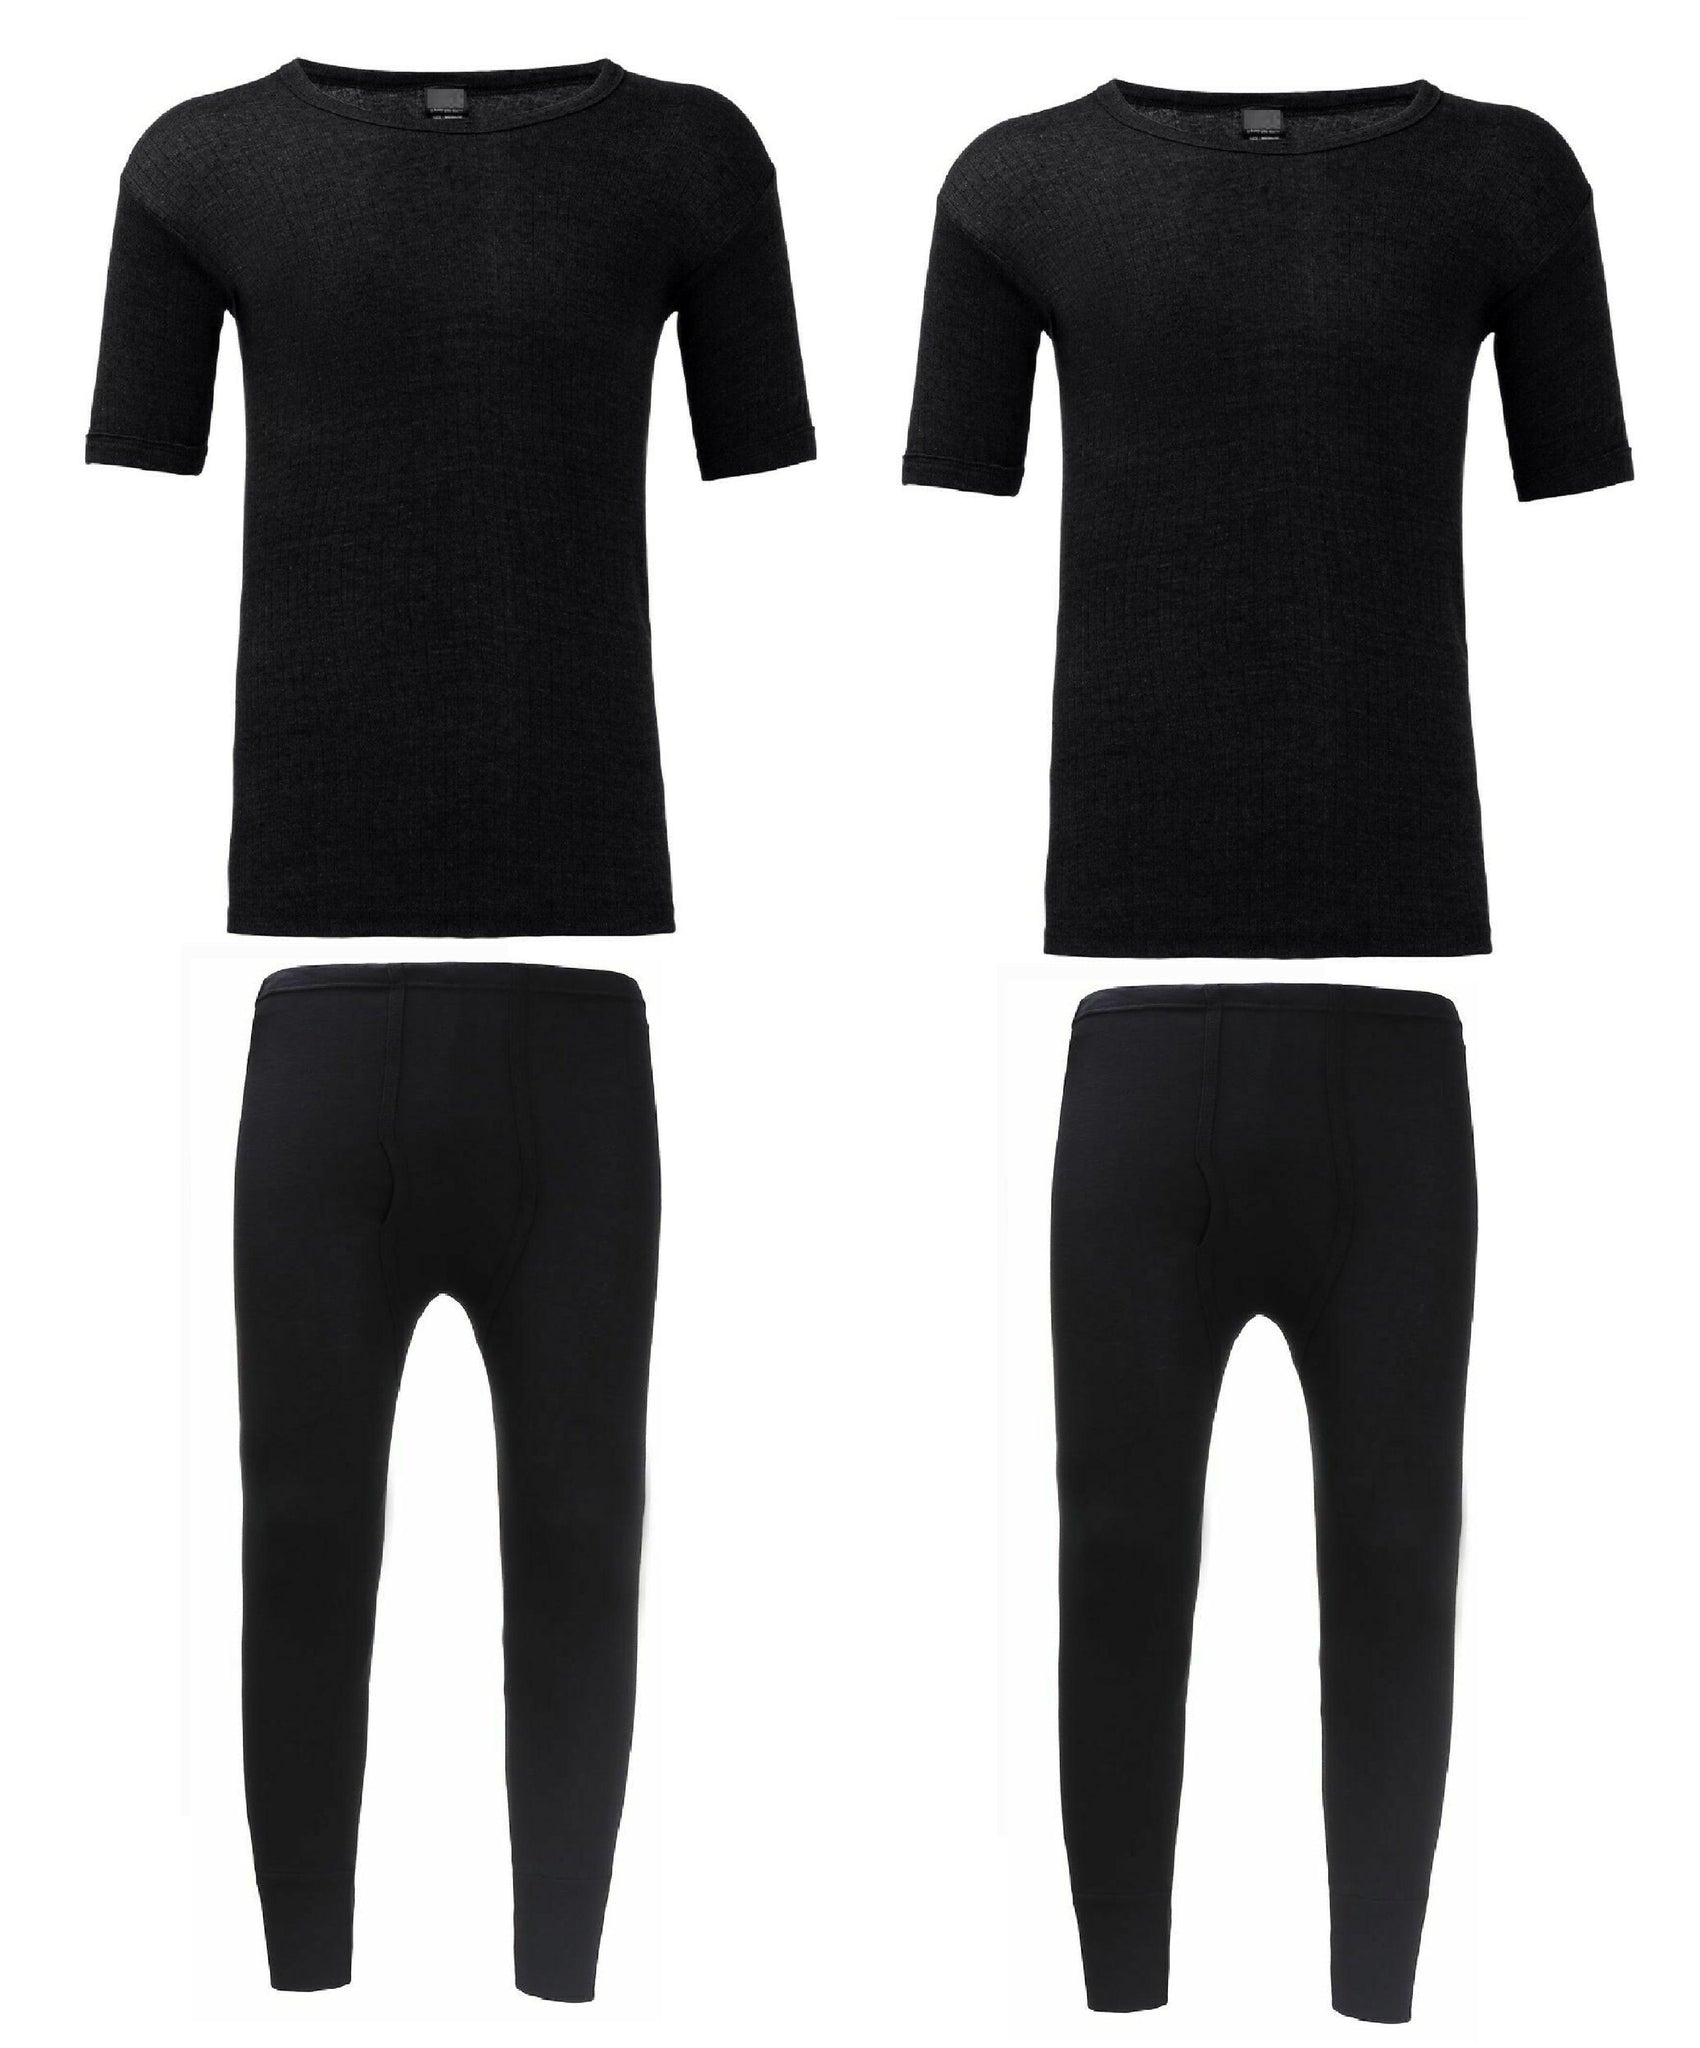 2 Pairs Black Set Thermal Underwear Short Sleeve T-Shirt Top